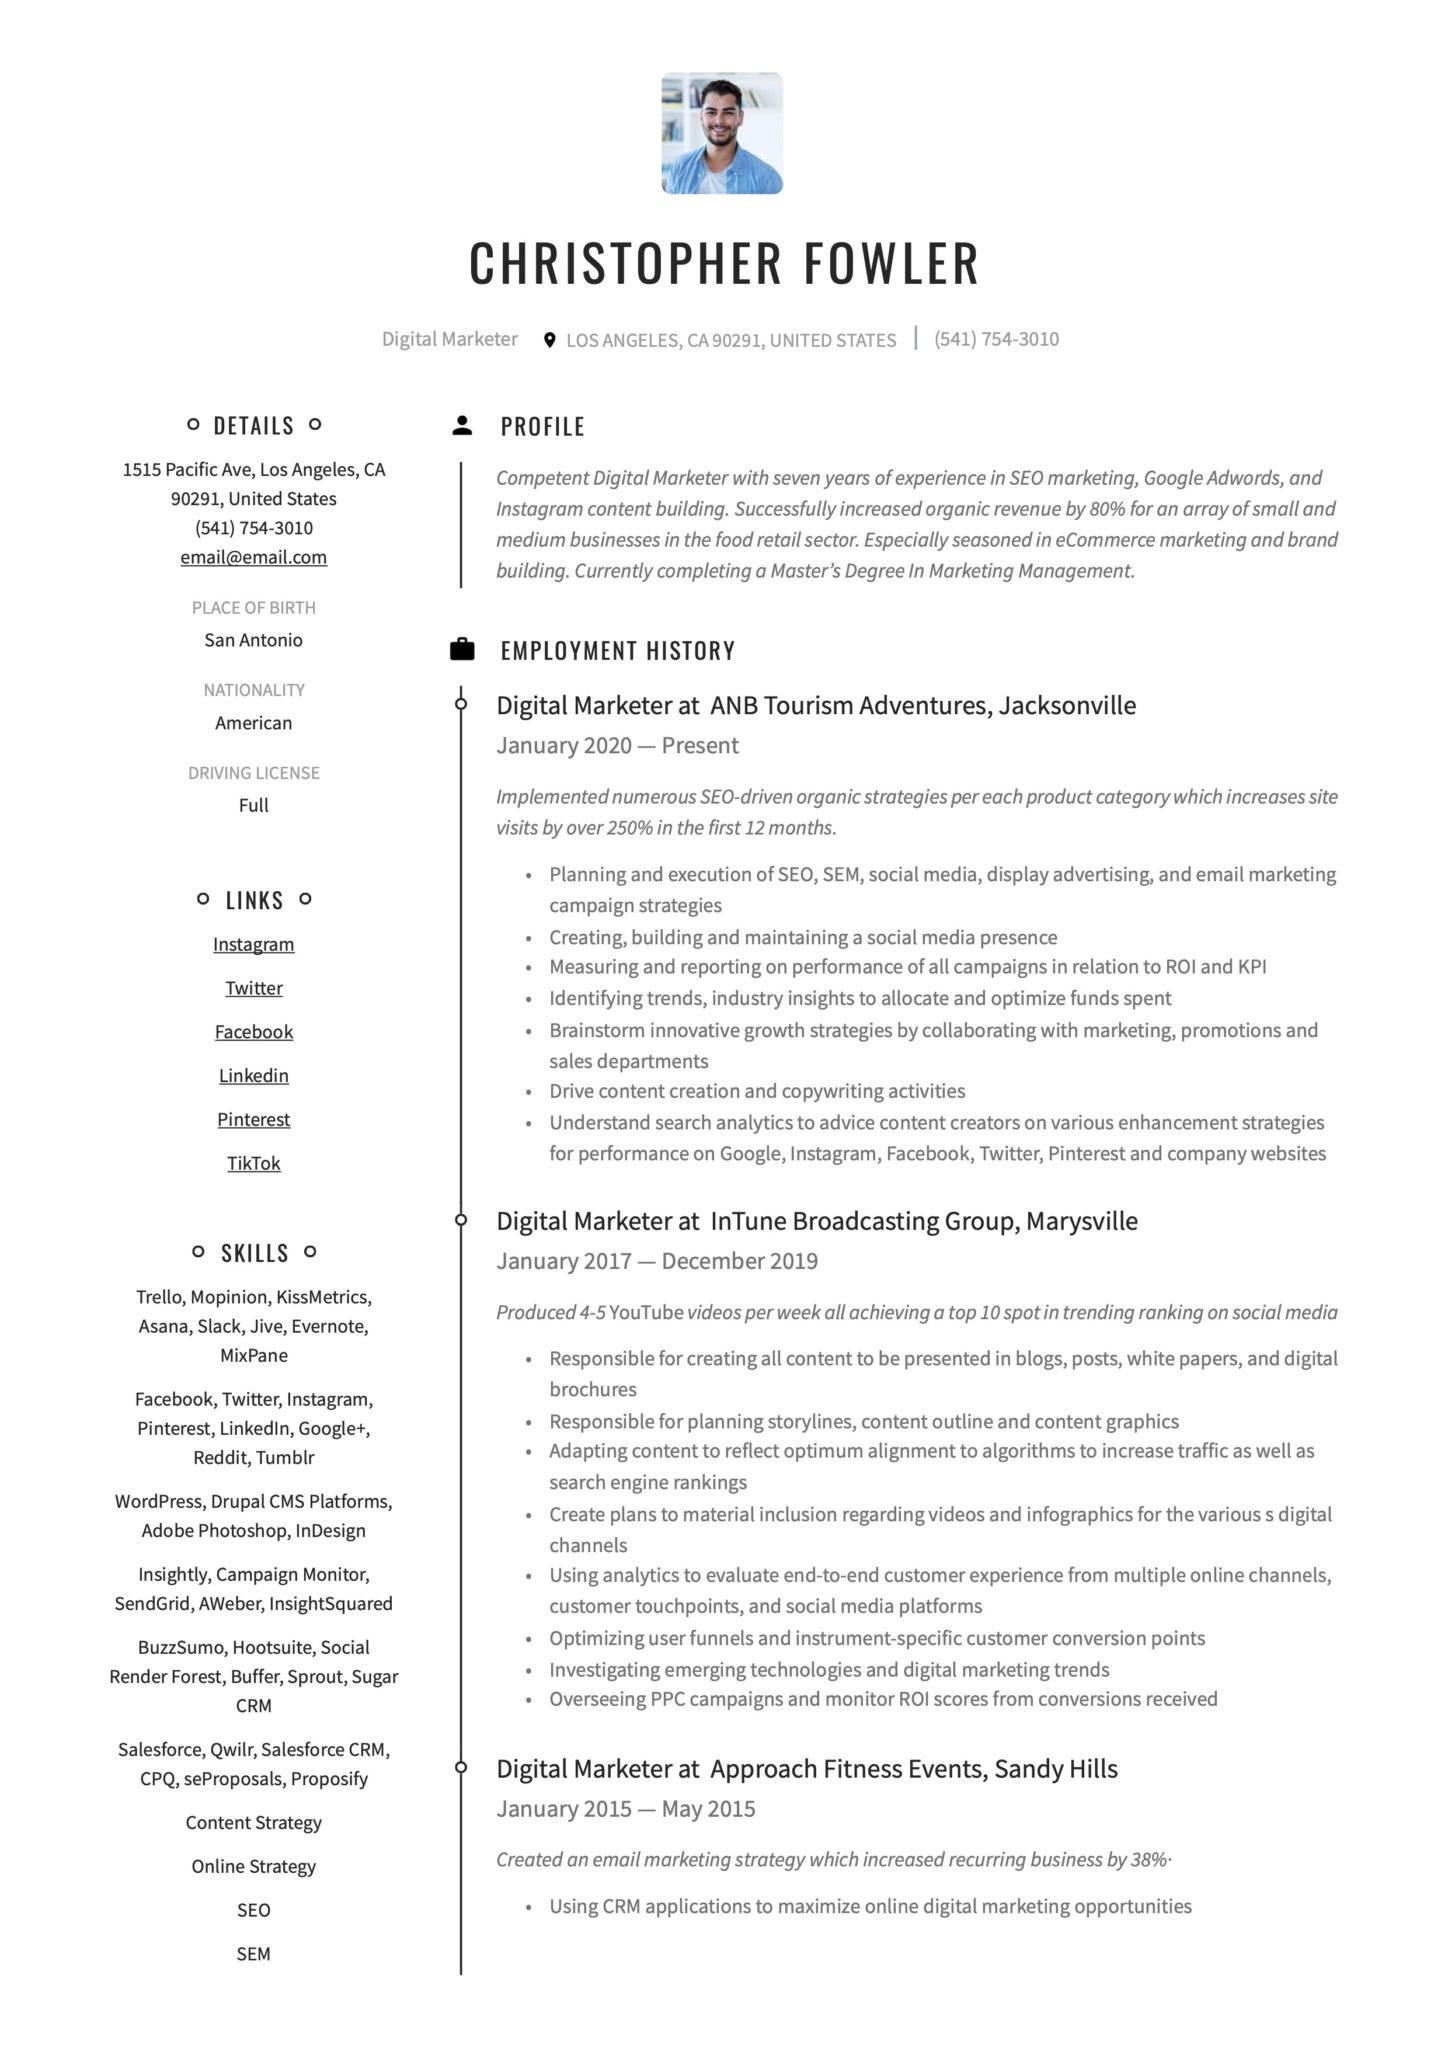 Digital Marketing Resume Sample for Experienced 19 Digital Marketer Resume Examples & Guide 2020 Pdf